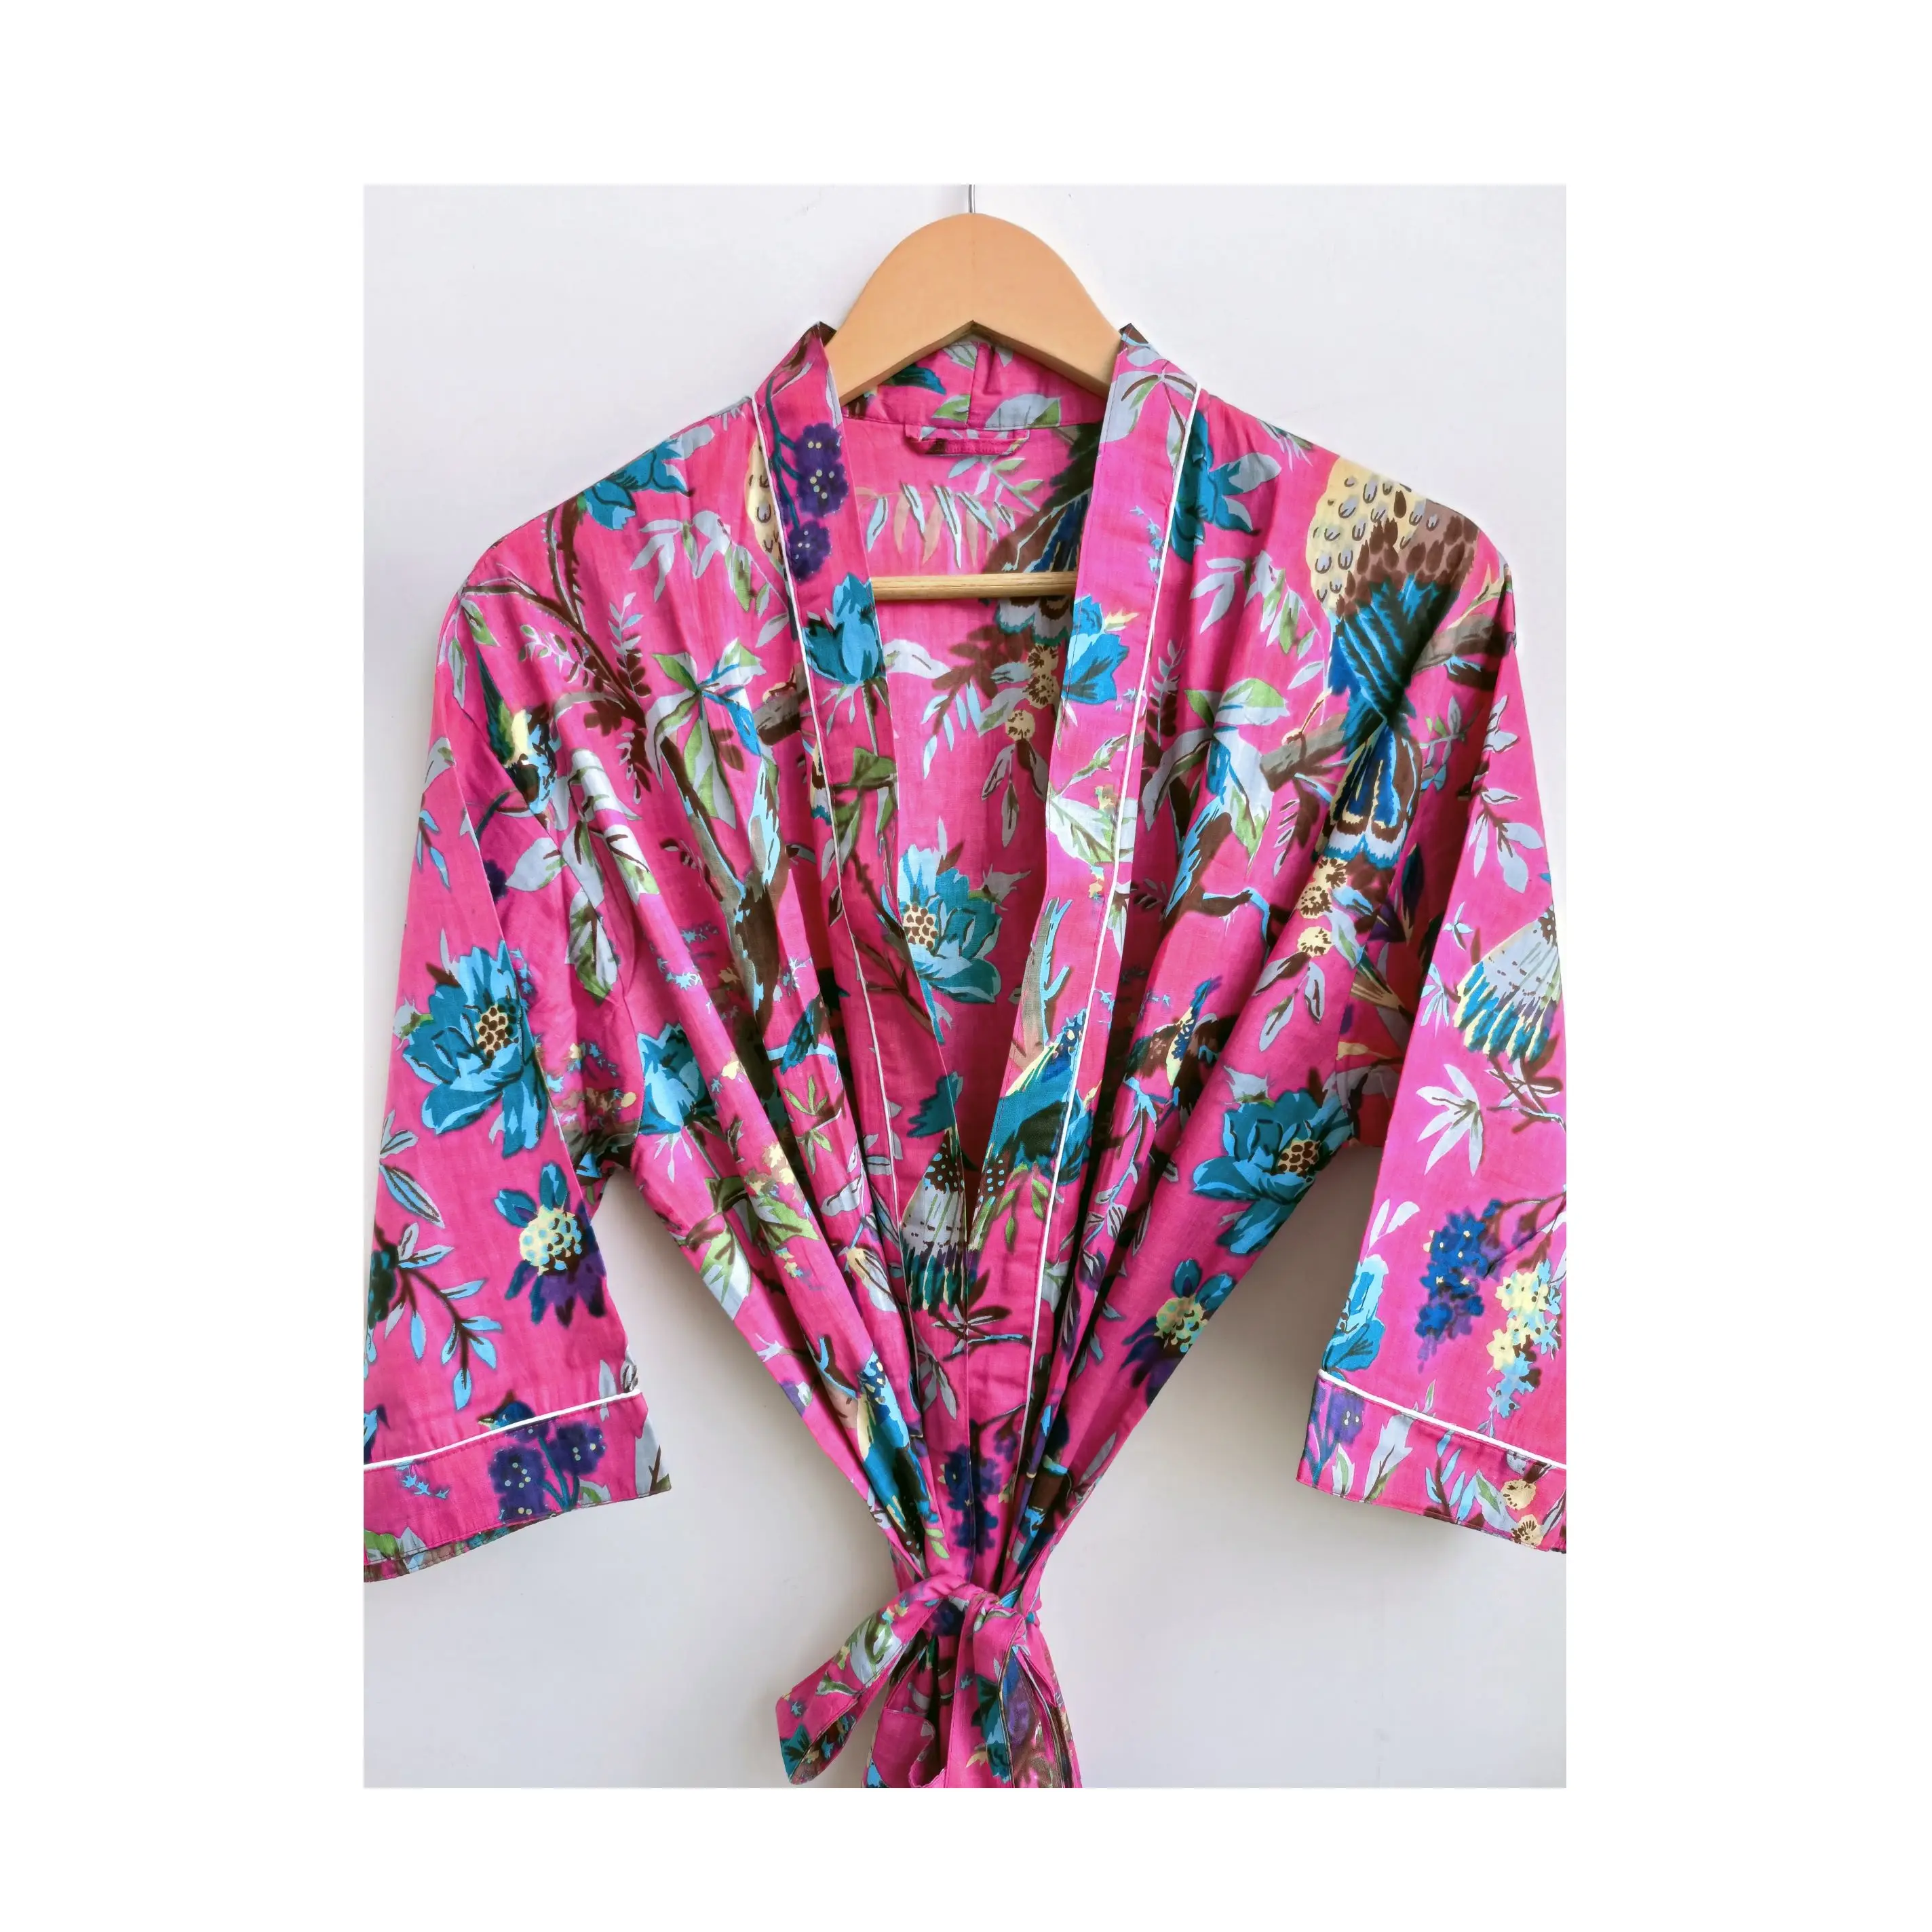 Cotton Kimono Robes Women's Cotton Gauze Nightgowns Springs and Sumer Thin Lightweighted Kimono Robes